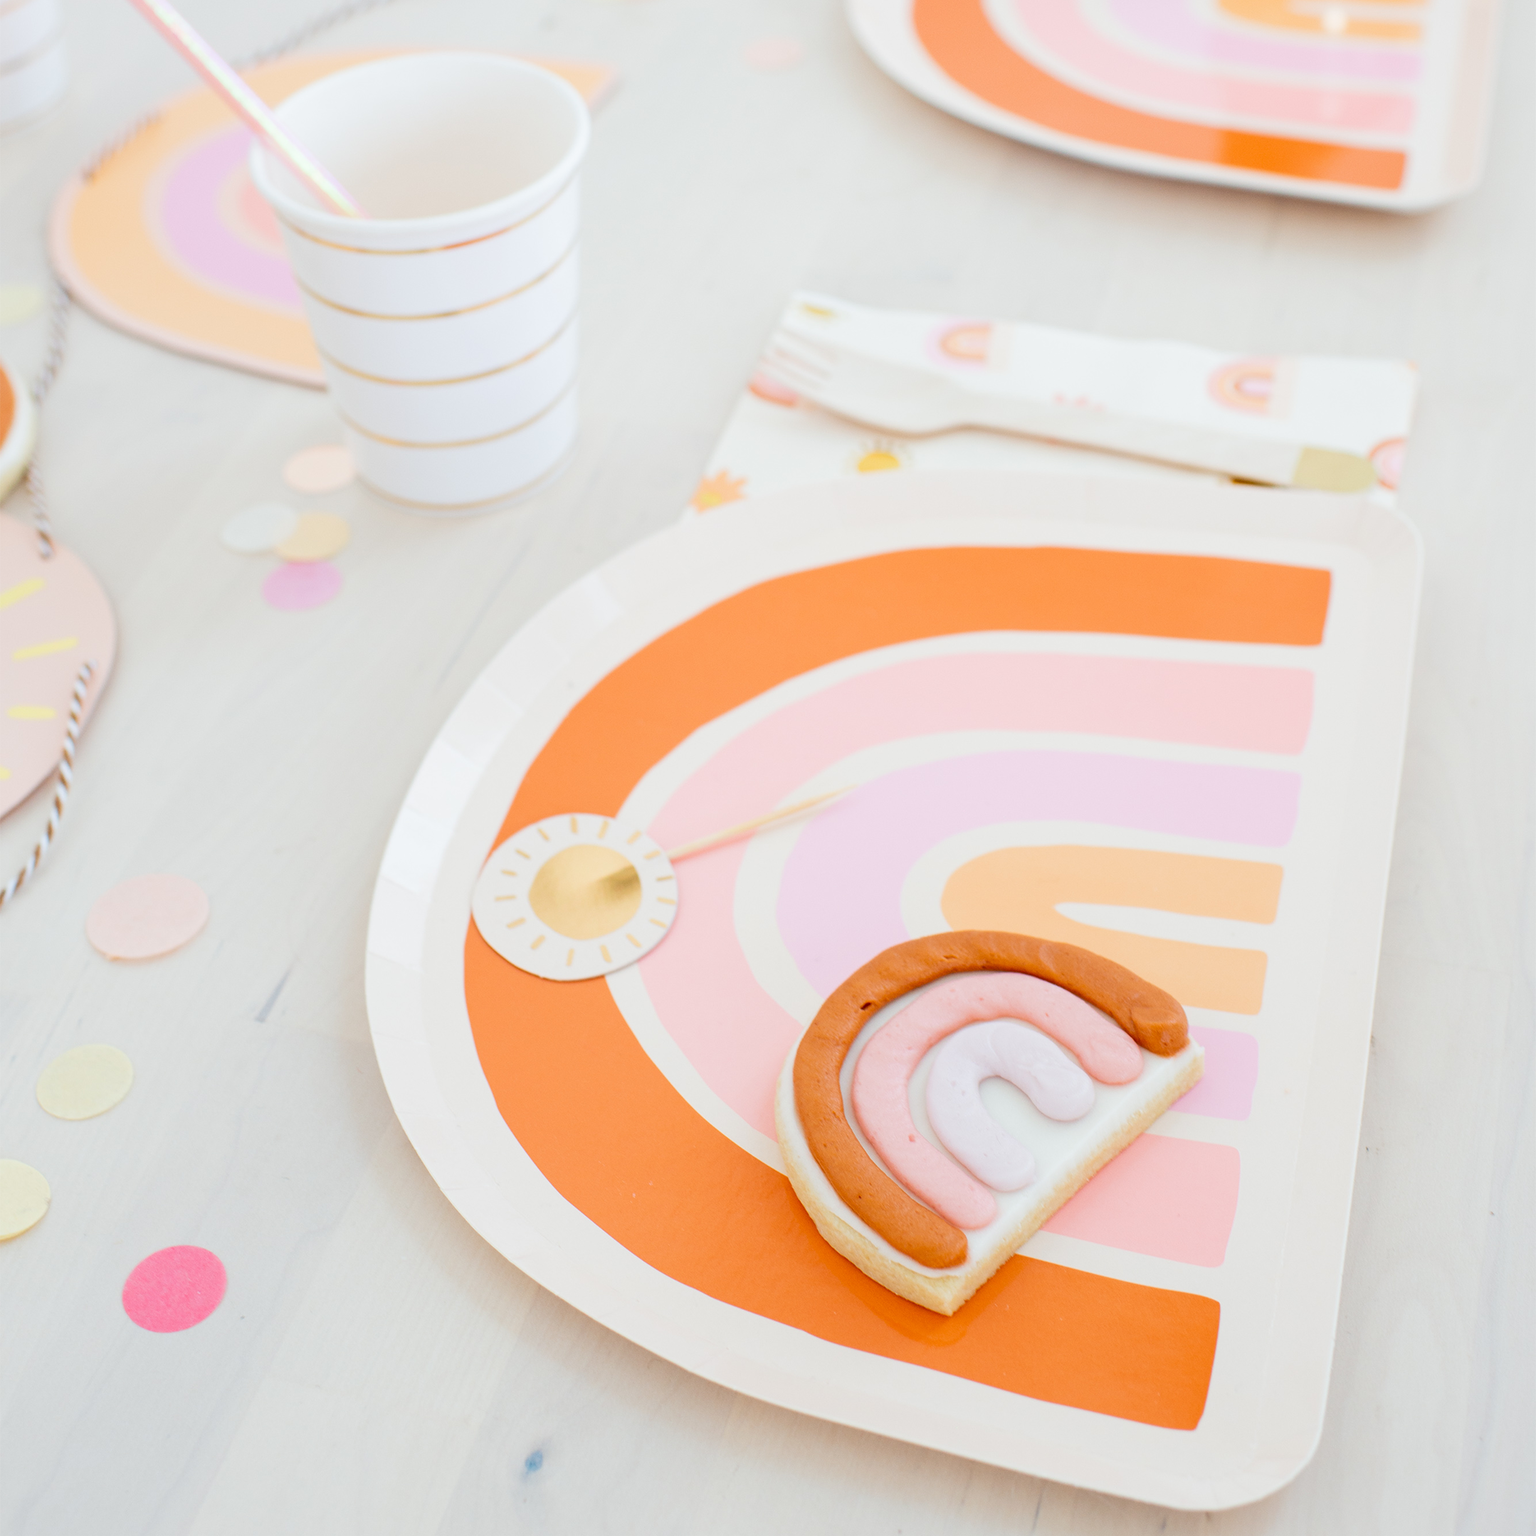 boho rainbow paper plates by Jollity & co